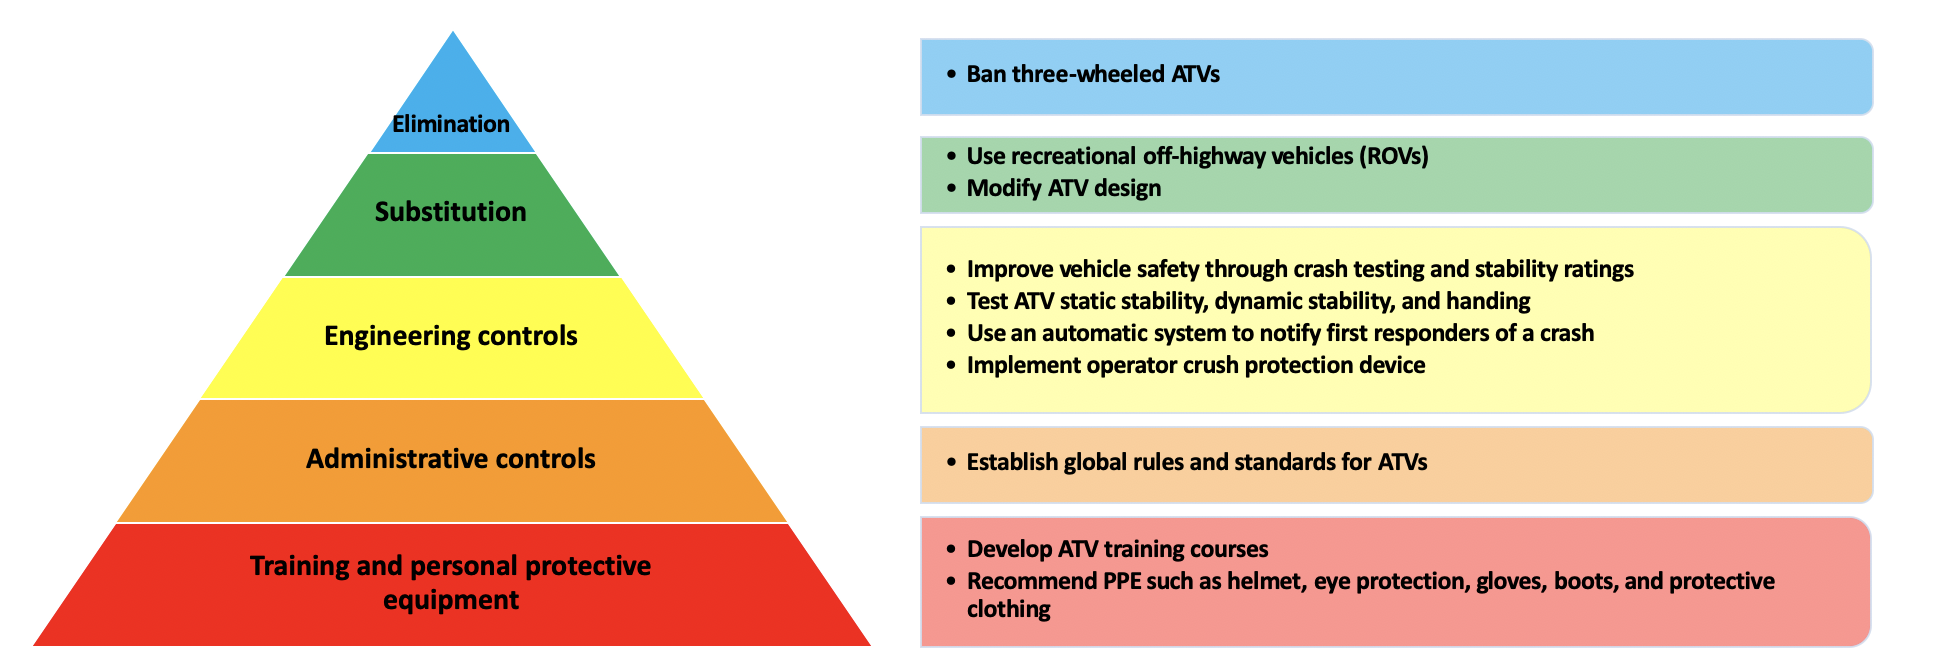 Illustration explaining ways to eliminate safety hazards for agricultural ATVs